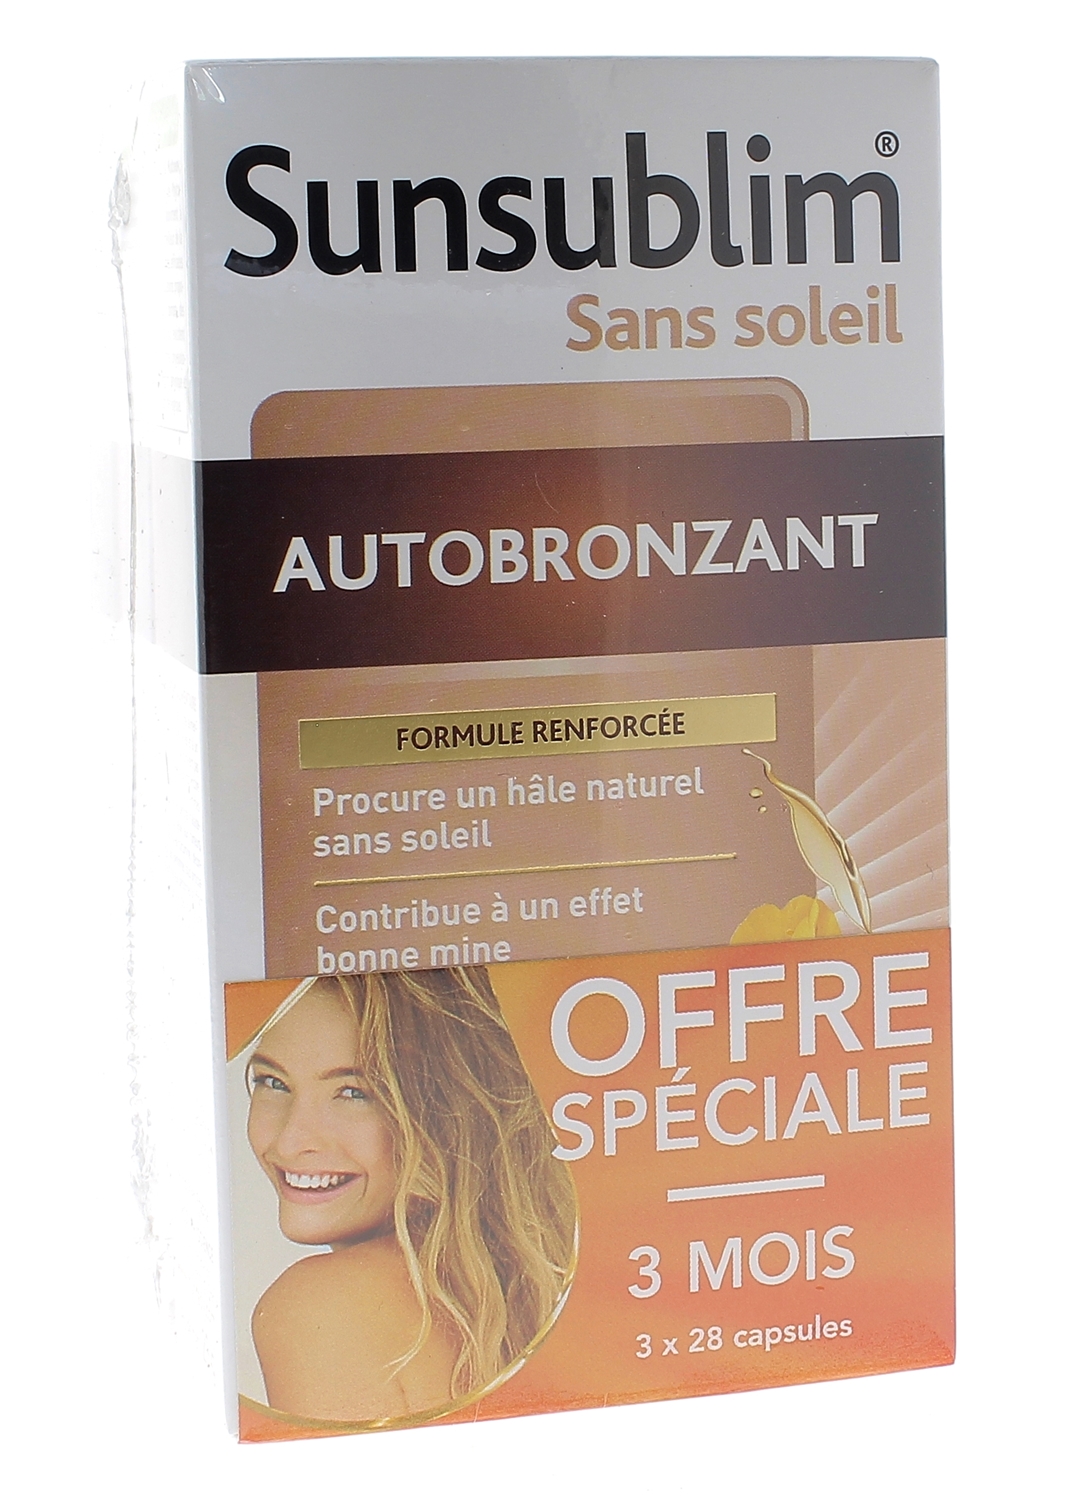 Sunsublim Autobronzant Nutréov - lot de 3x28 capsules (1 boîte offerte)